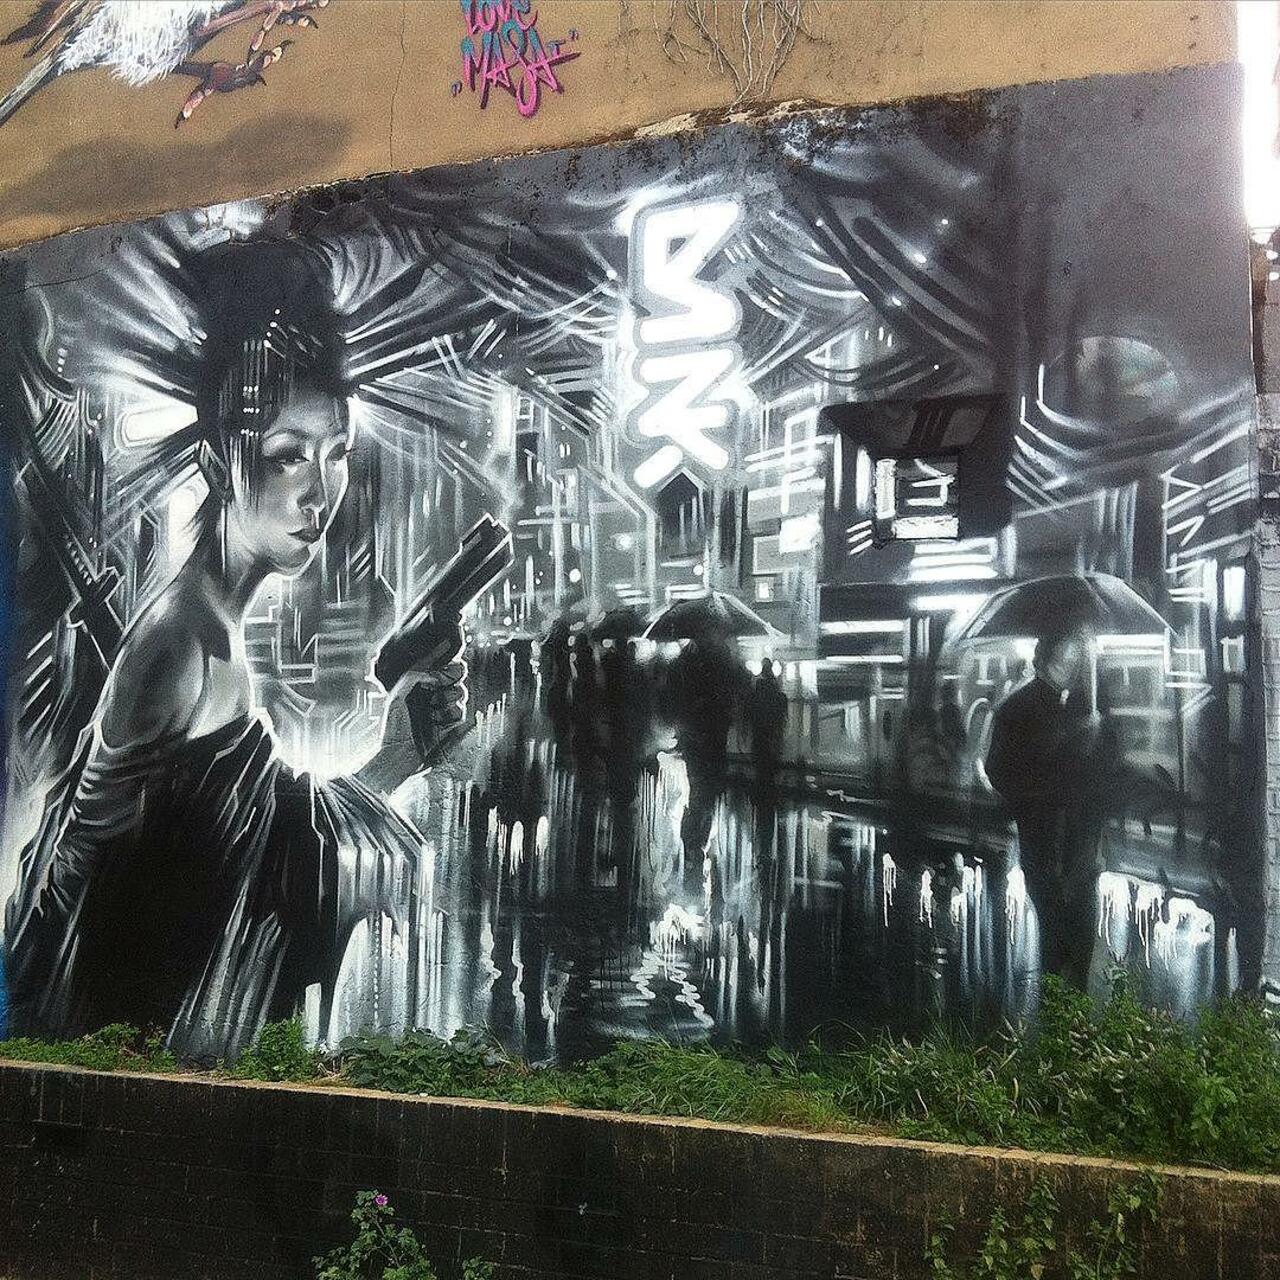 #Graffspotting #PhotoGraff Art by Dan Kitchener  #Graffiti #StreetArt #UrbanArt #DanKitchener #DanK #PedleyStreet #… http://t.co/v47pzAaMsz